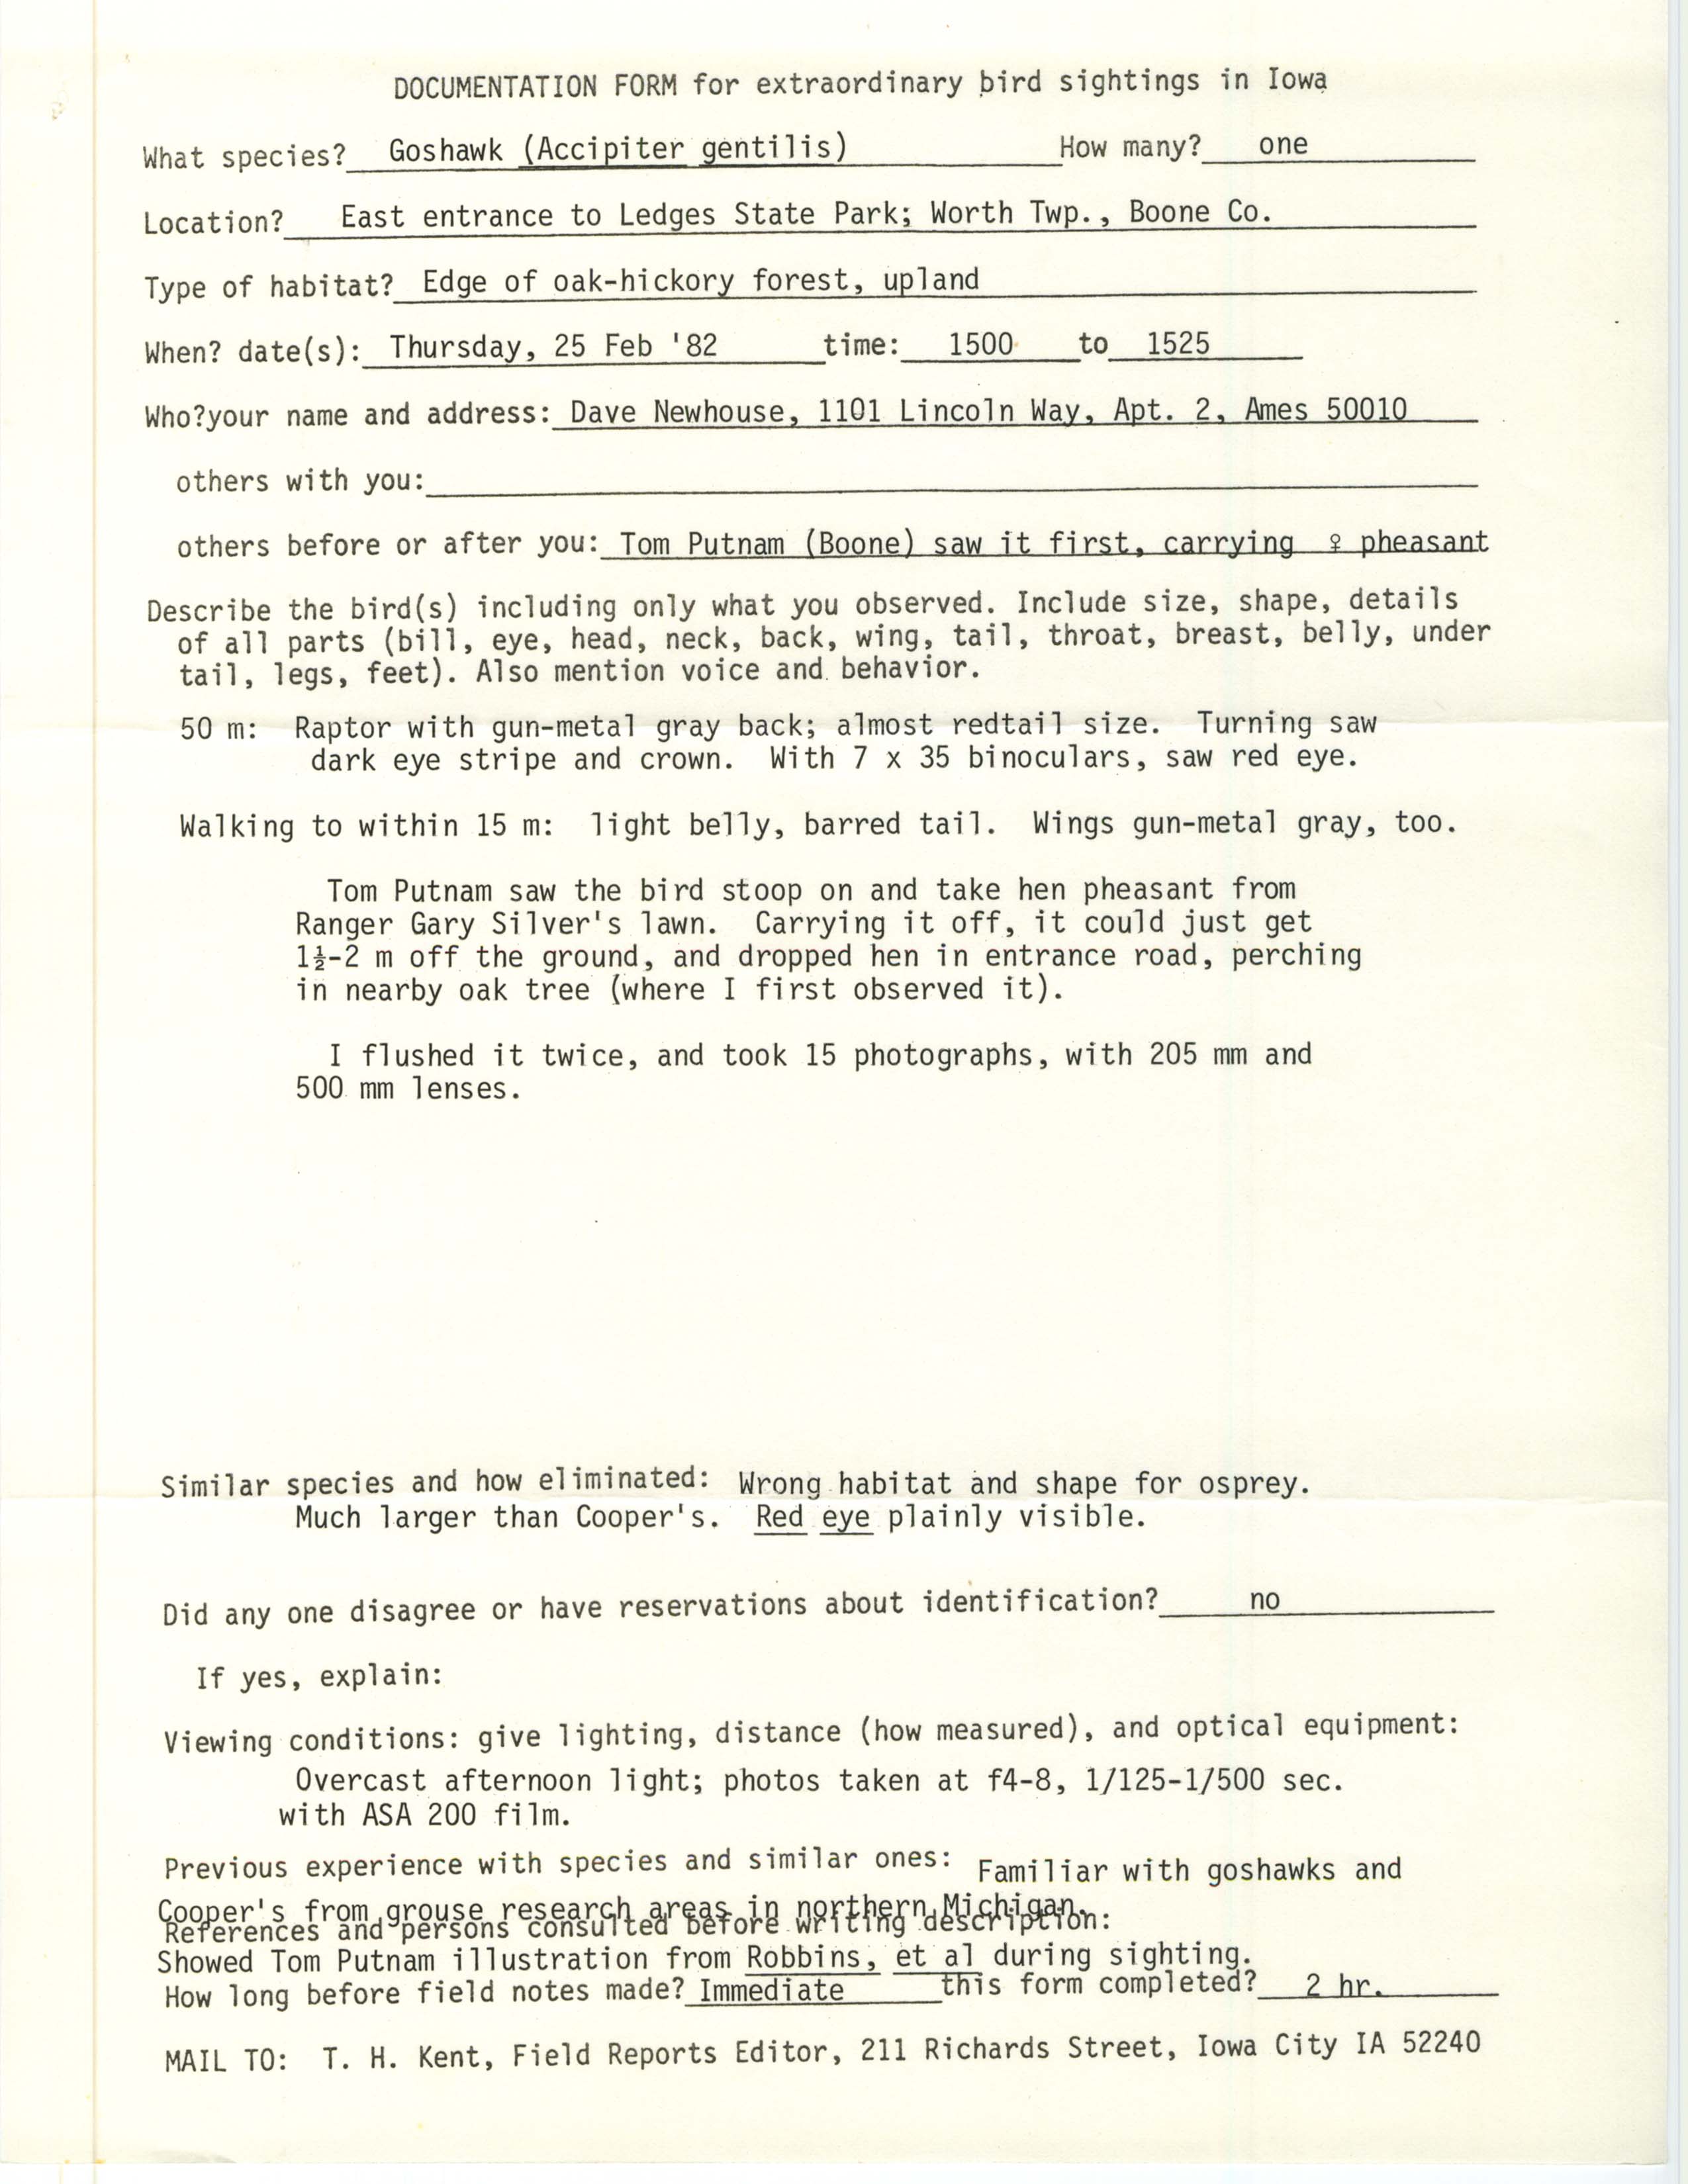 Rare bird documentation form for Northern Goshawk at Ledges State Park, 1982